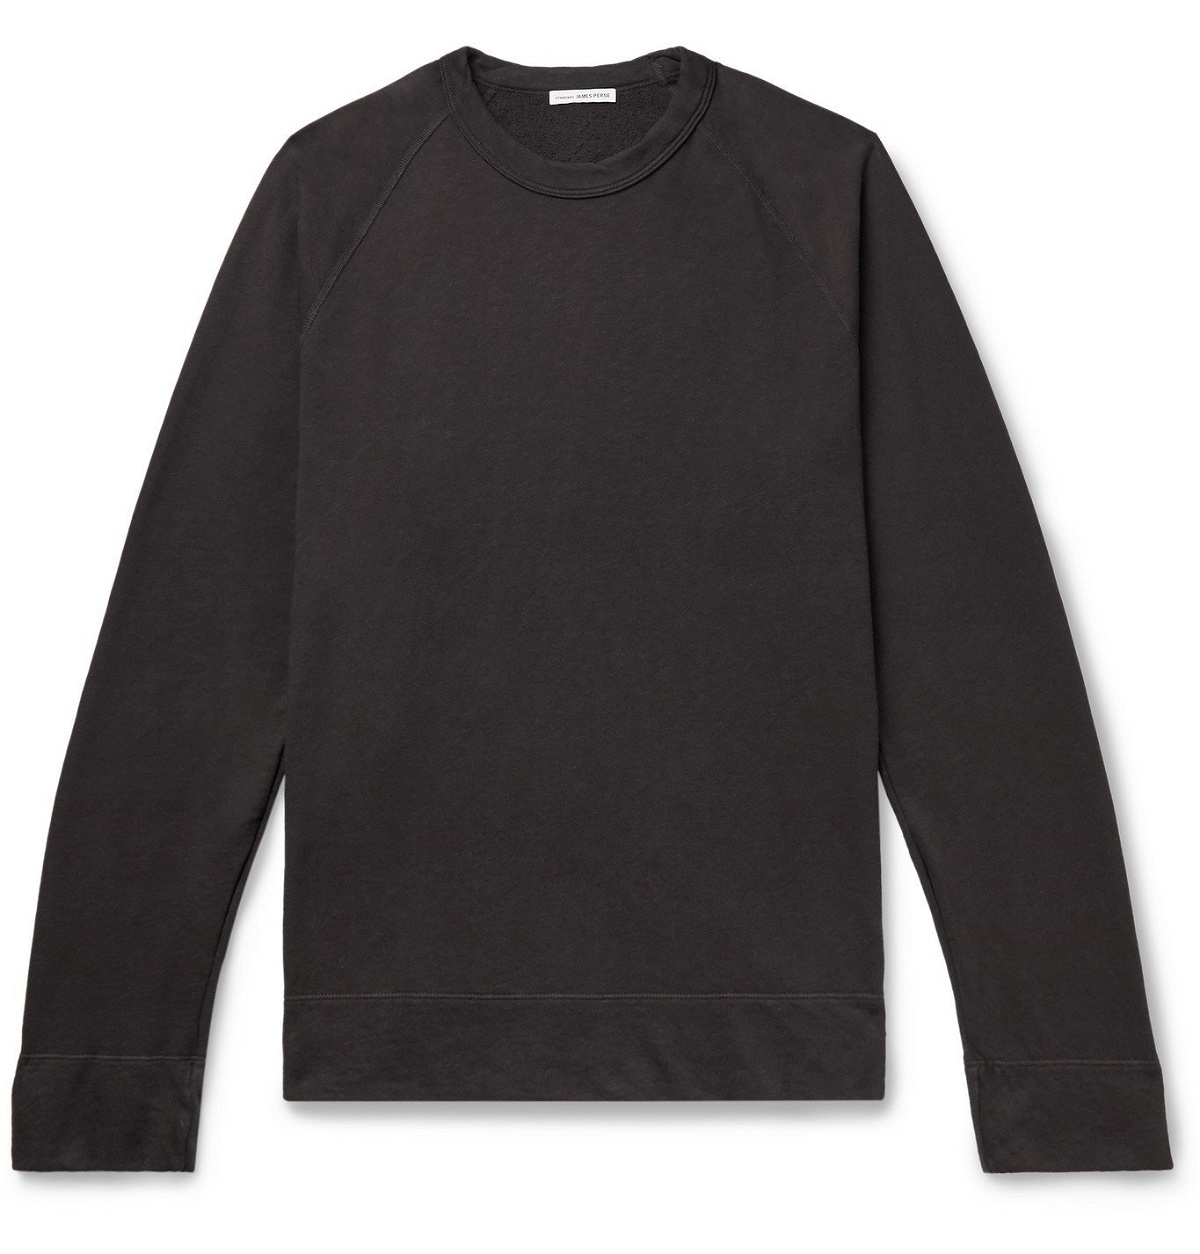 James Perse - Loopback Supima Cotton-Jersey Sweatshirt - Black James Perse